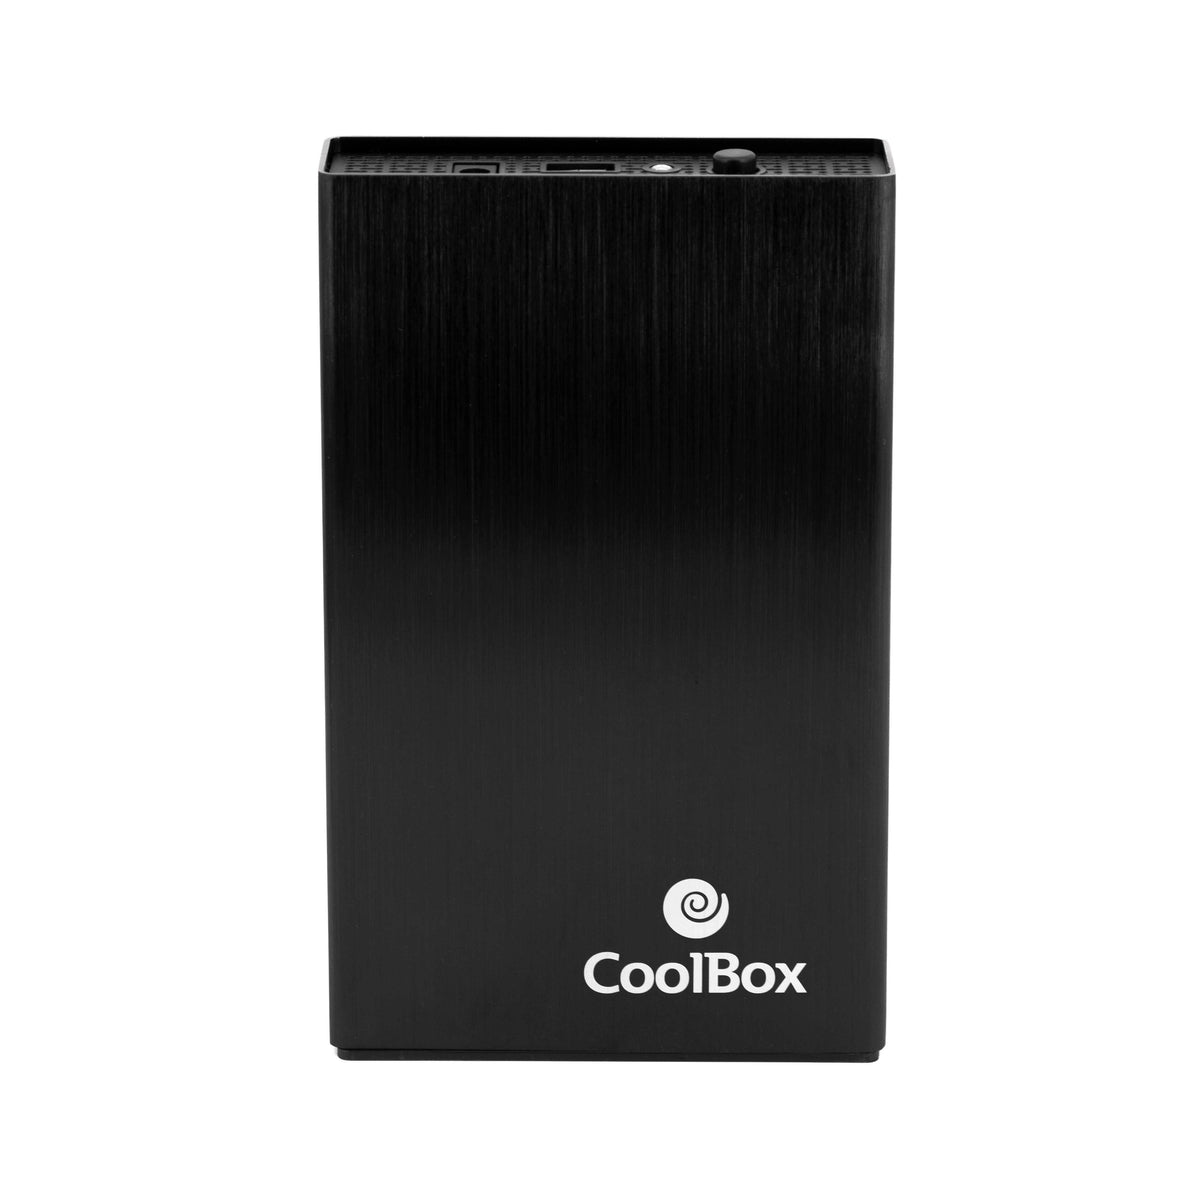 Box for external disk 3.5 CoolBox SCA-3533 USB3.0 Aluminum Black